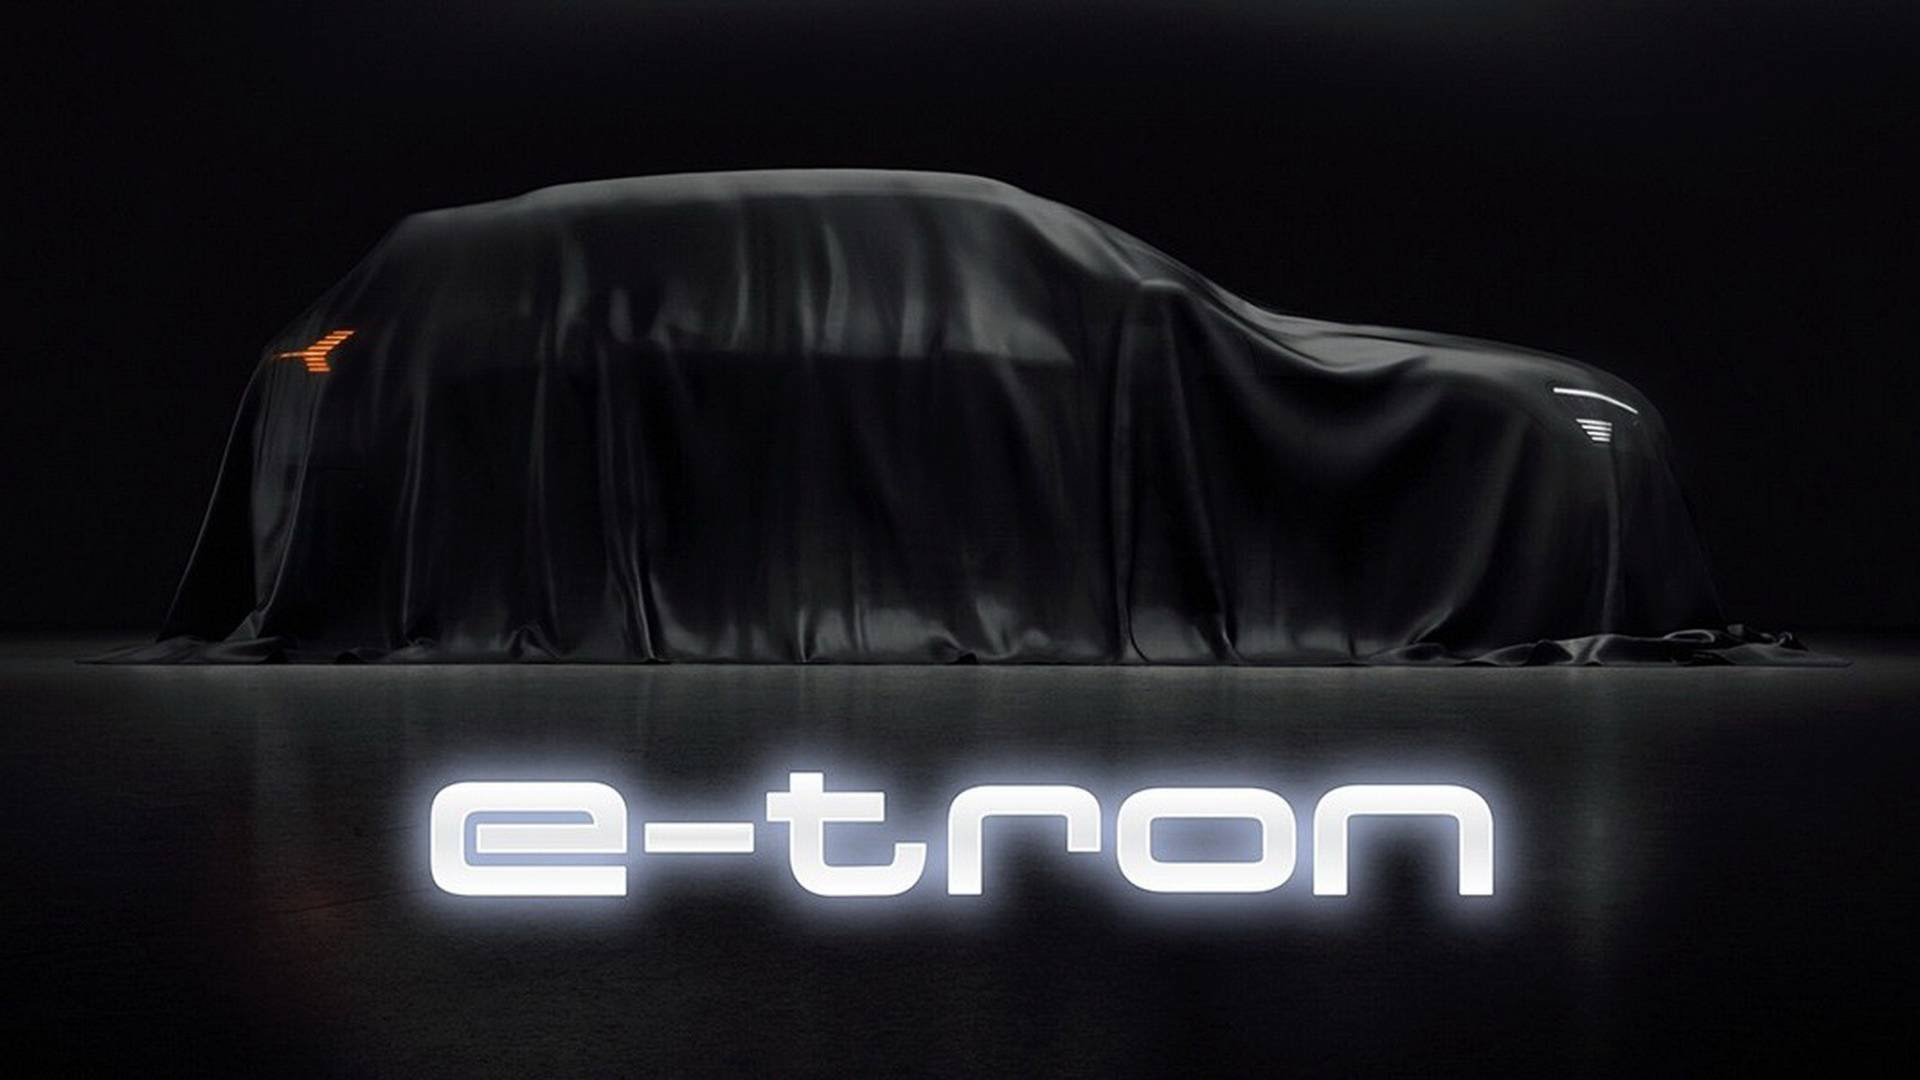 Max Parrot takes San Fran for Audi E-Tron Launch